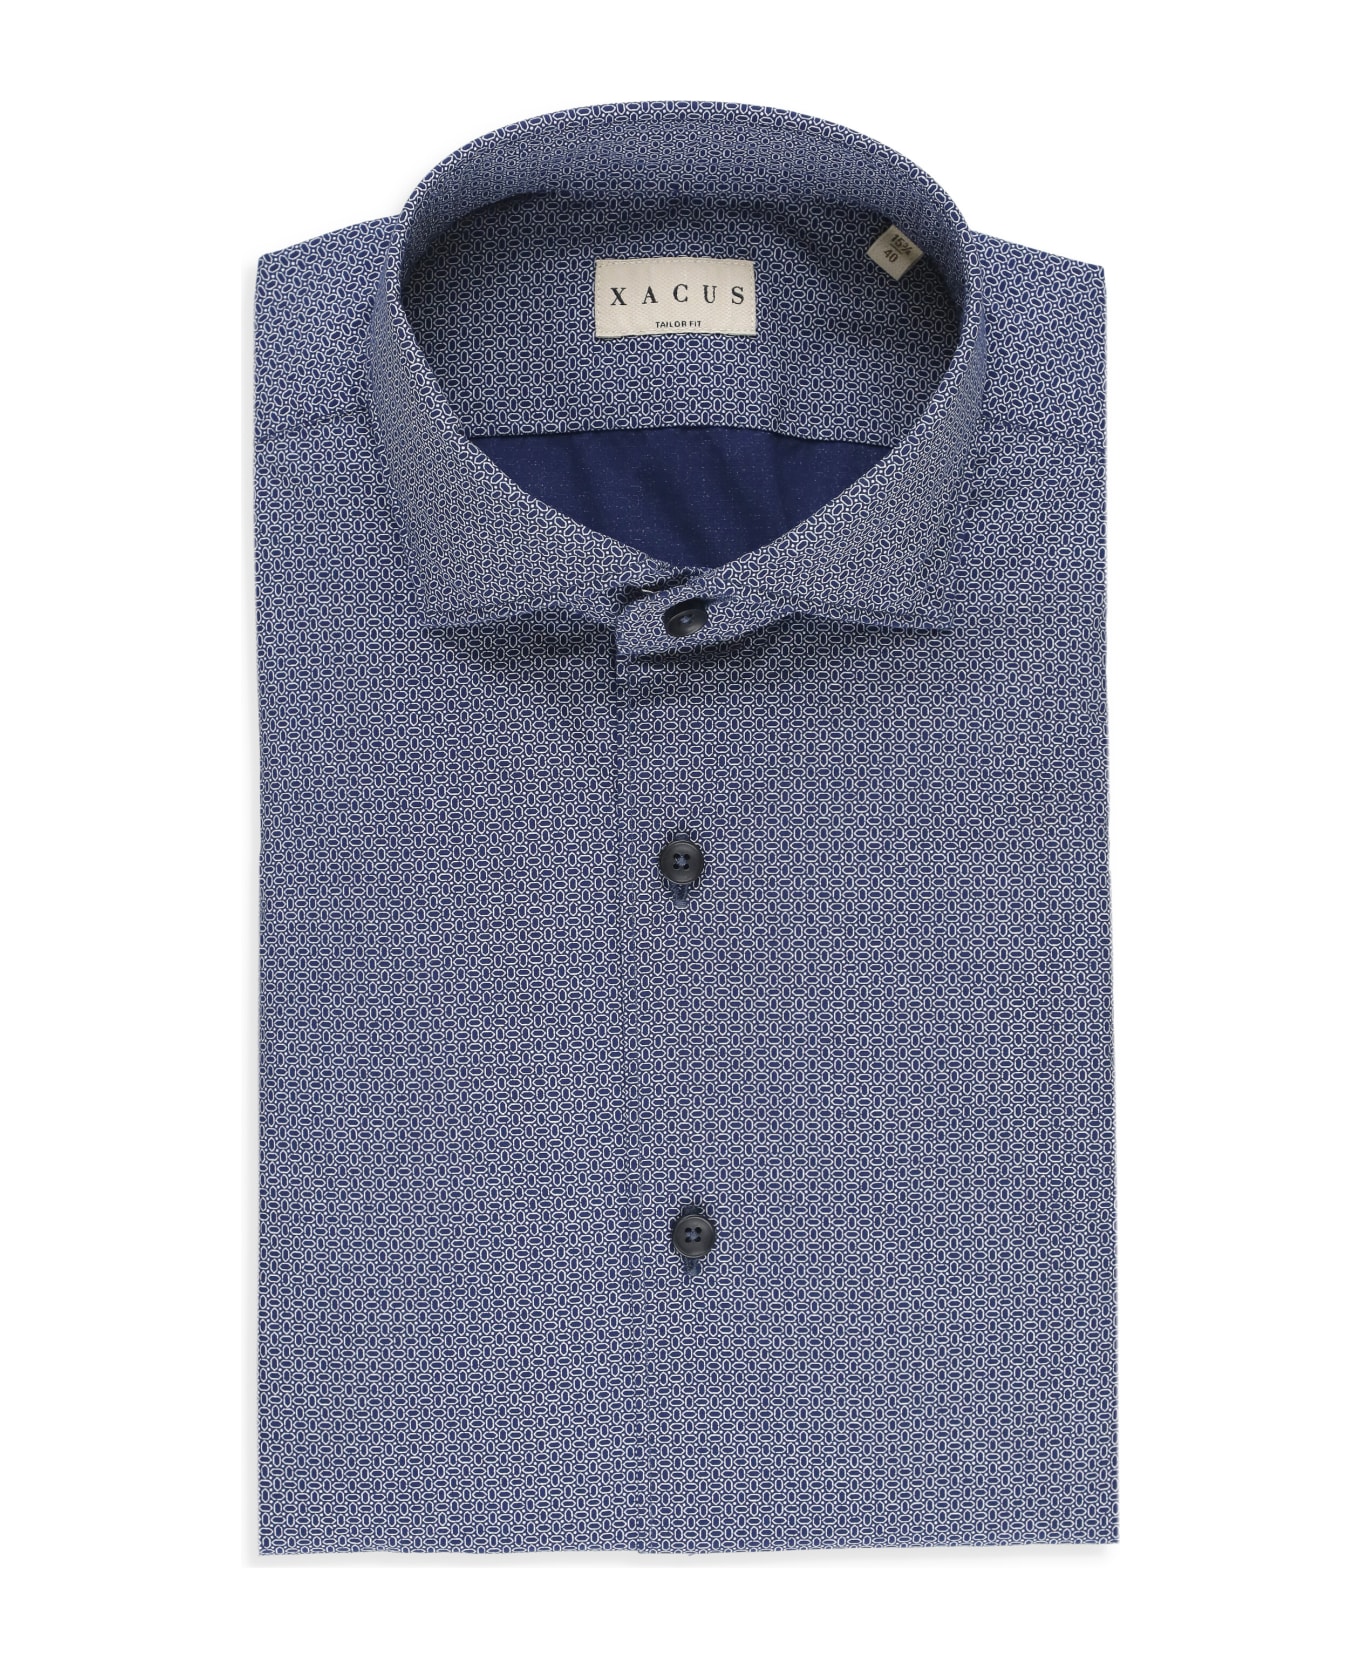 Xacus Tailor Shirt - Blue